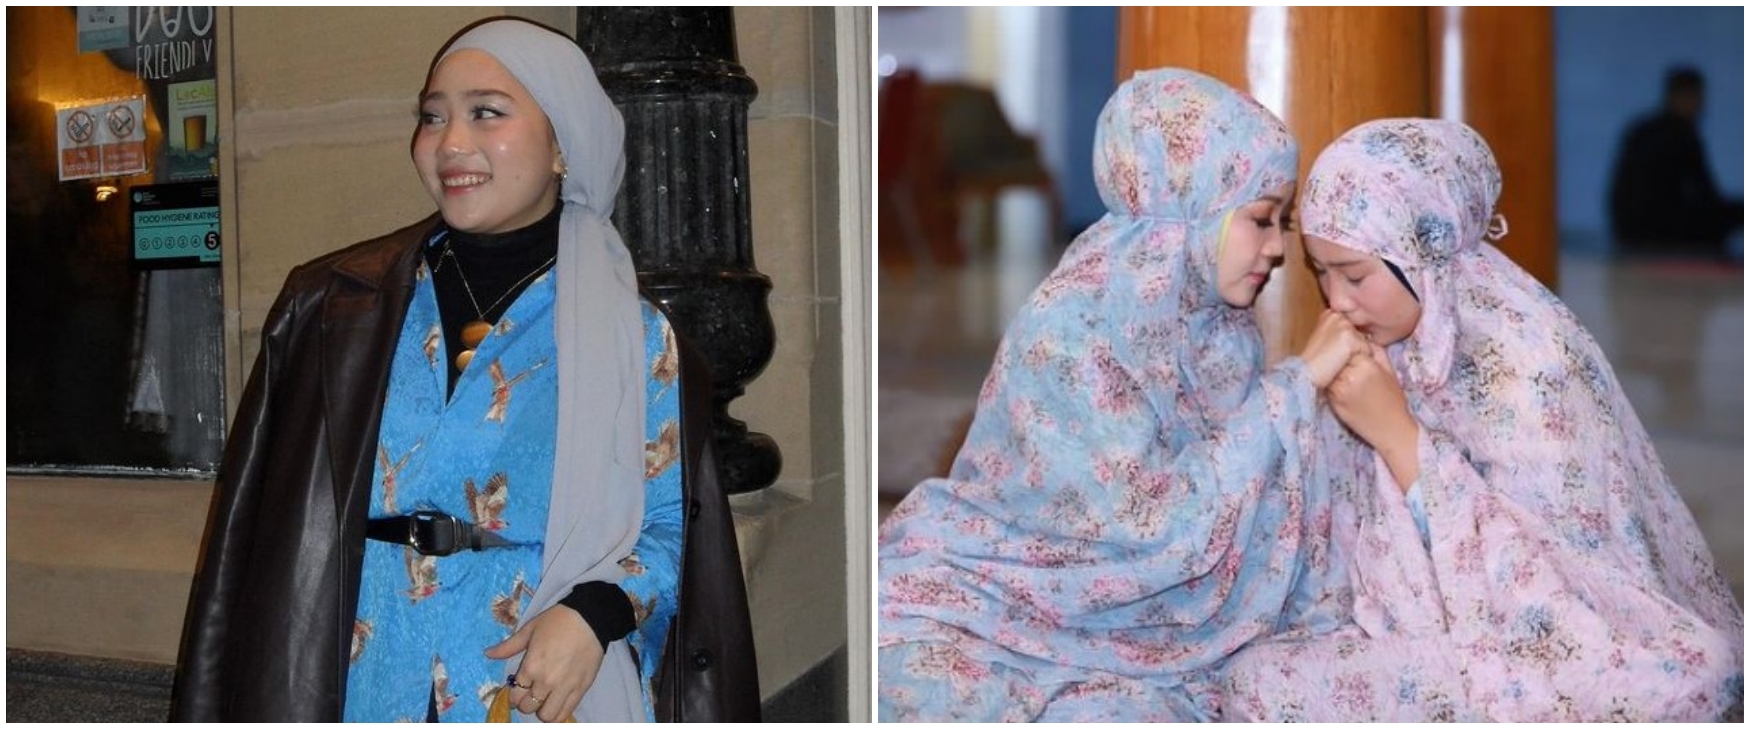 Kini kuliah di Inggris putri Ridwan Kamil putuskan lepas hijab, respons sang ibunda jadi sorotan